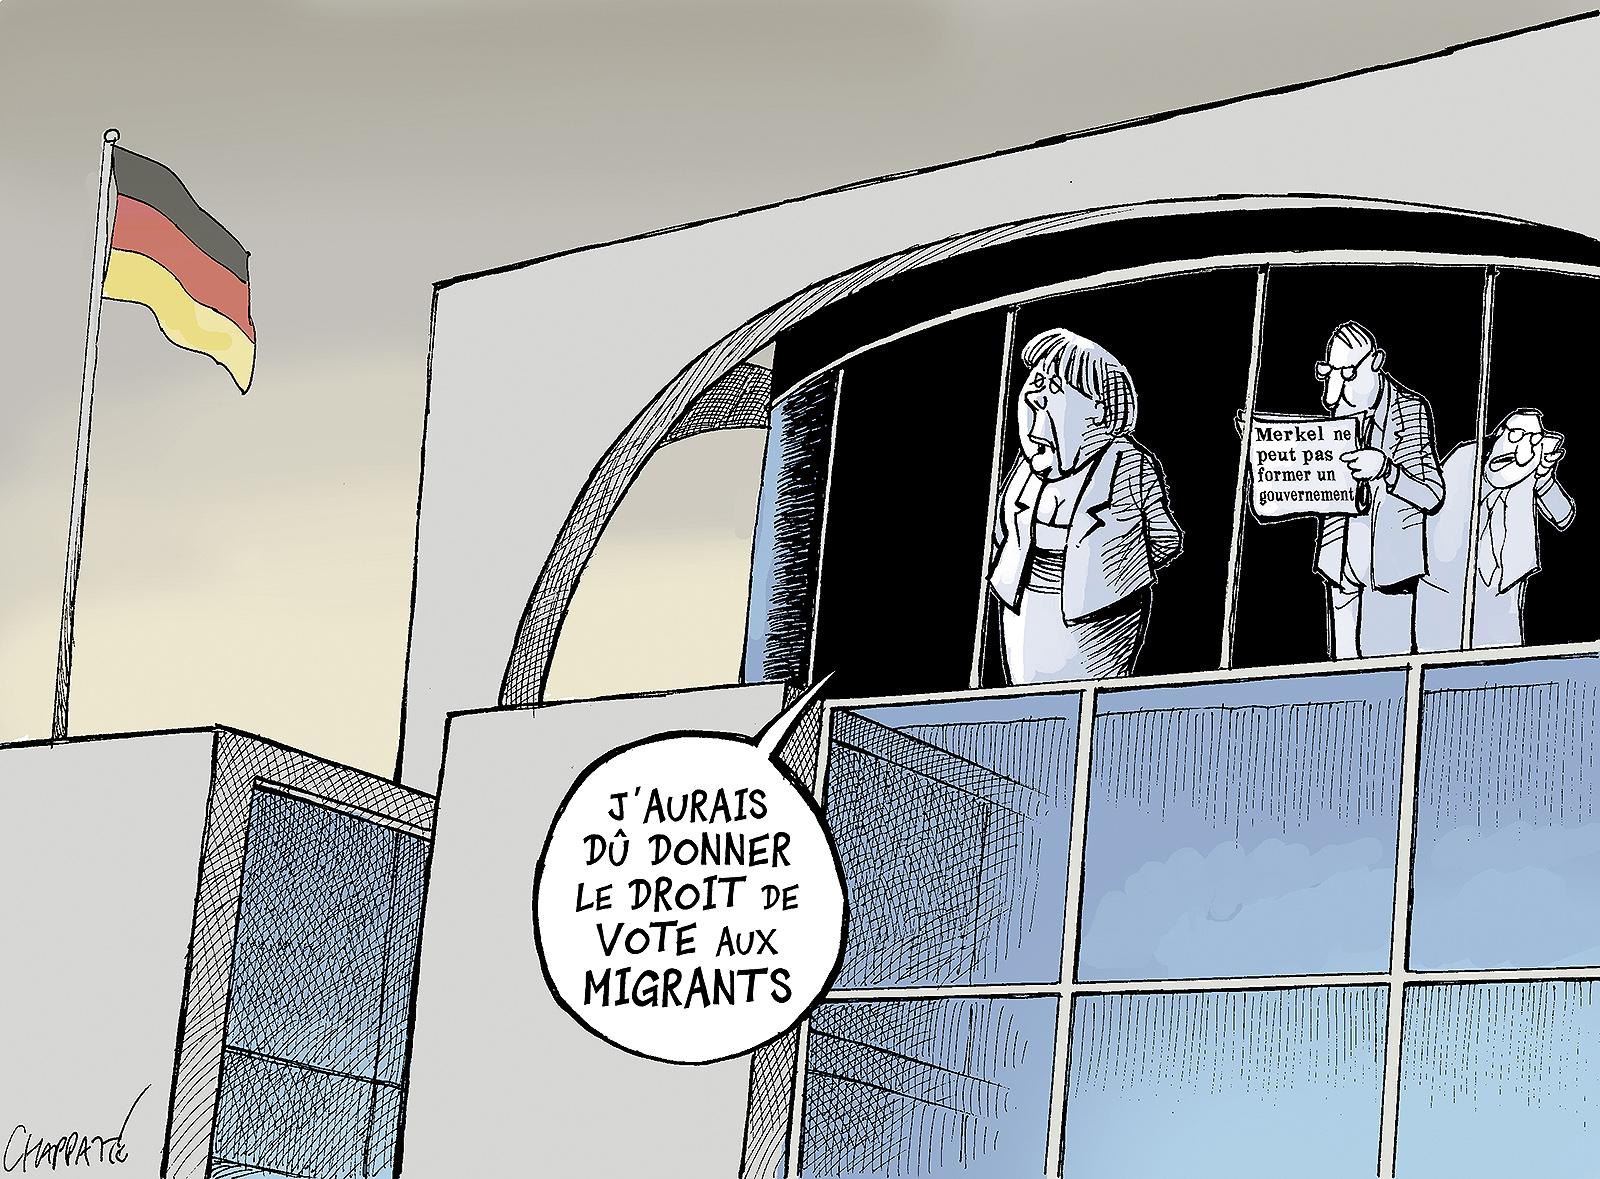 Merkel sans coalition